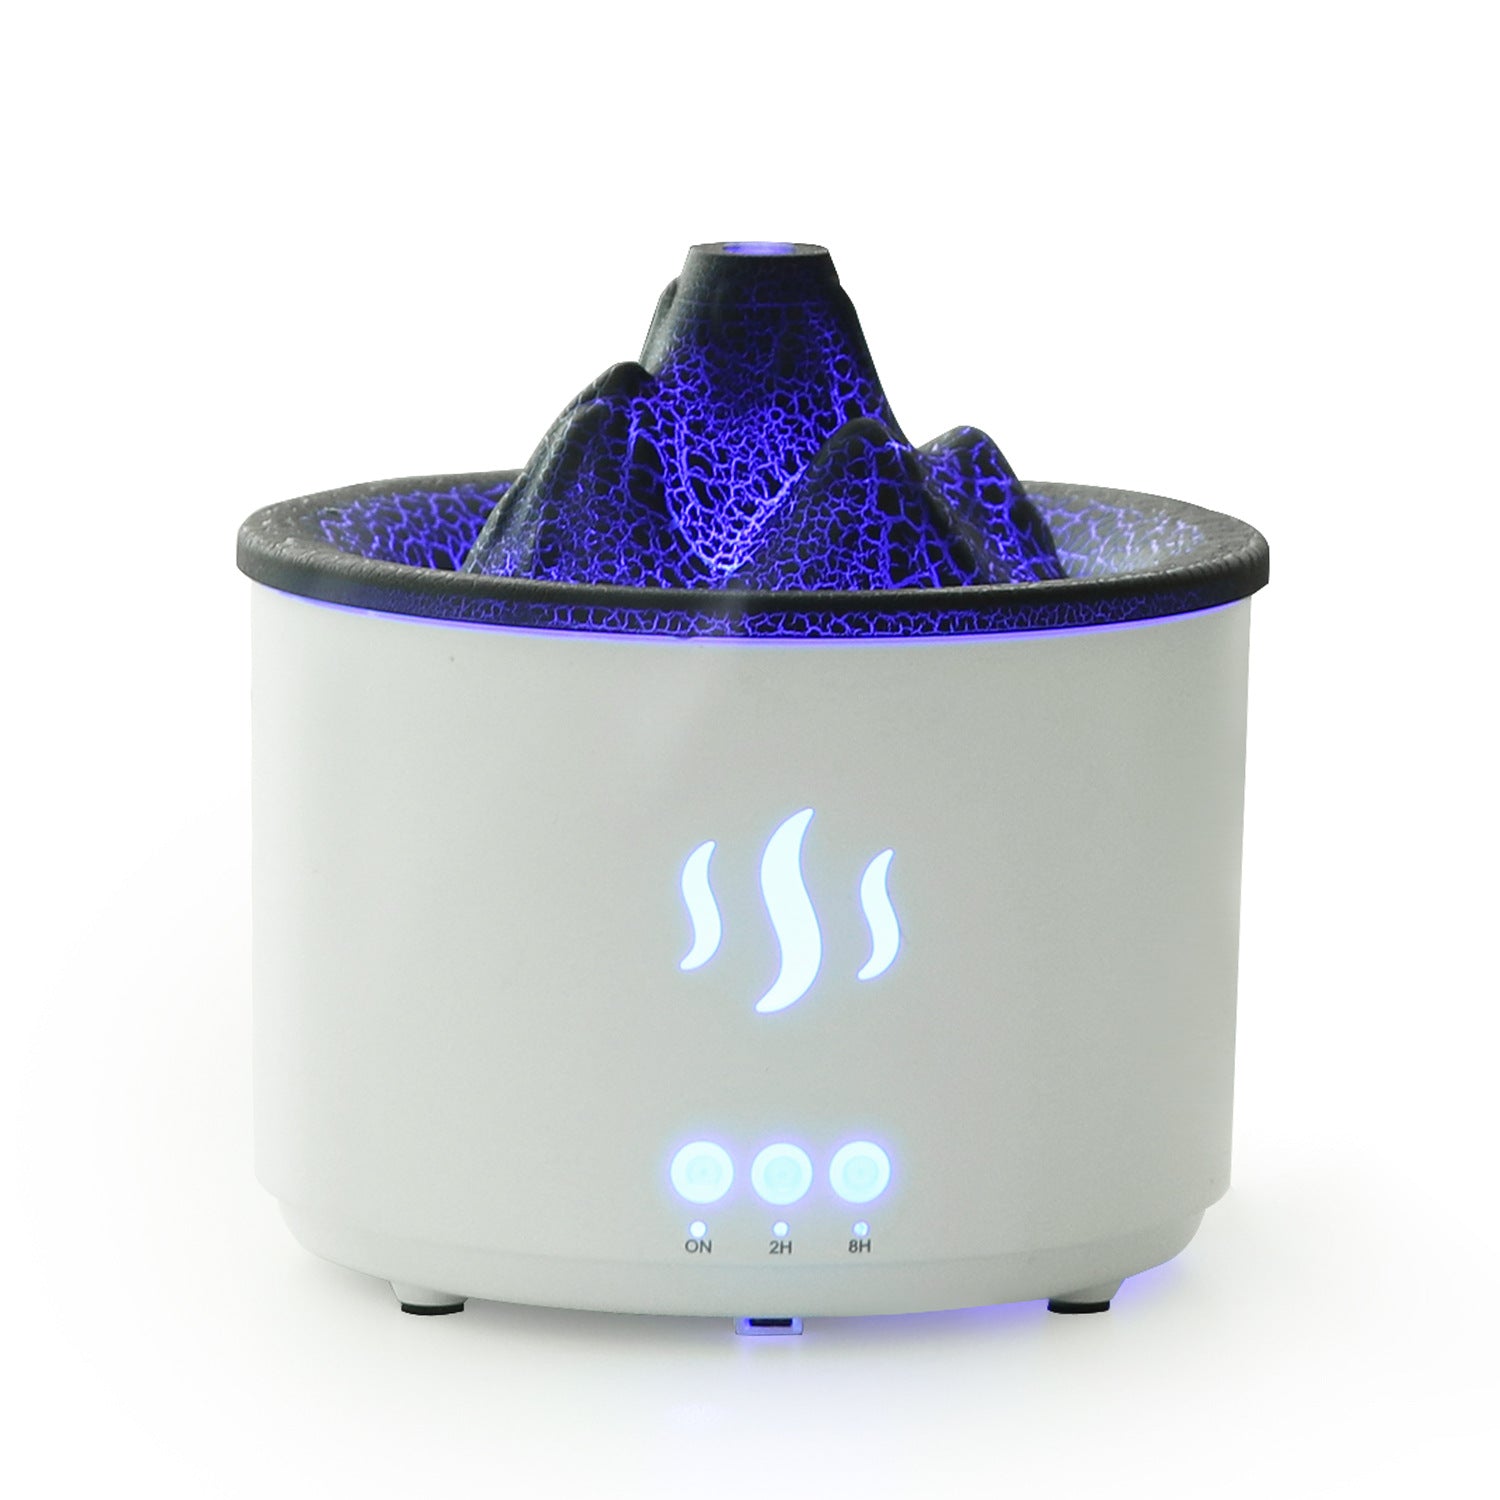 Ultrasonic Aroma Diffuser with Remote Control